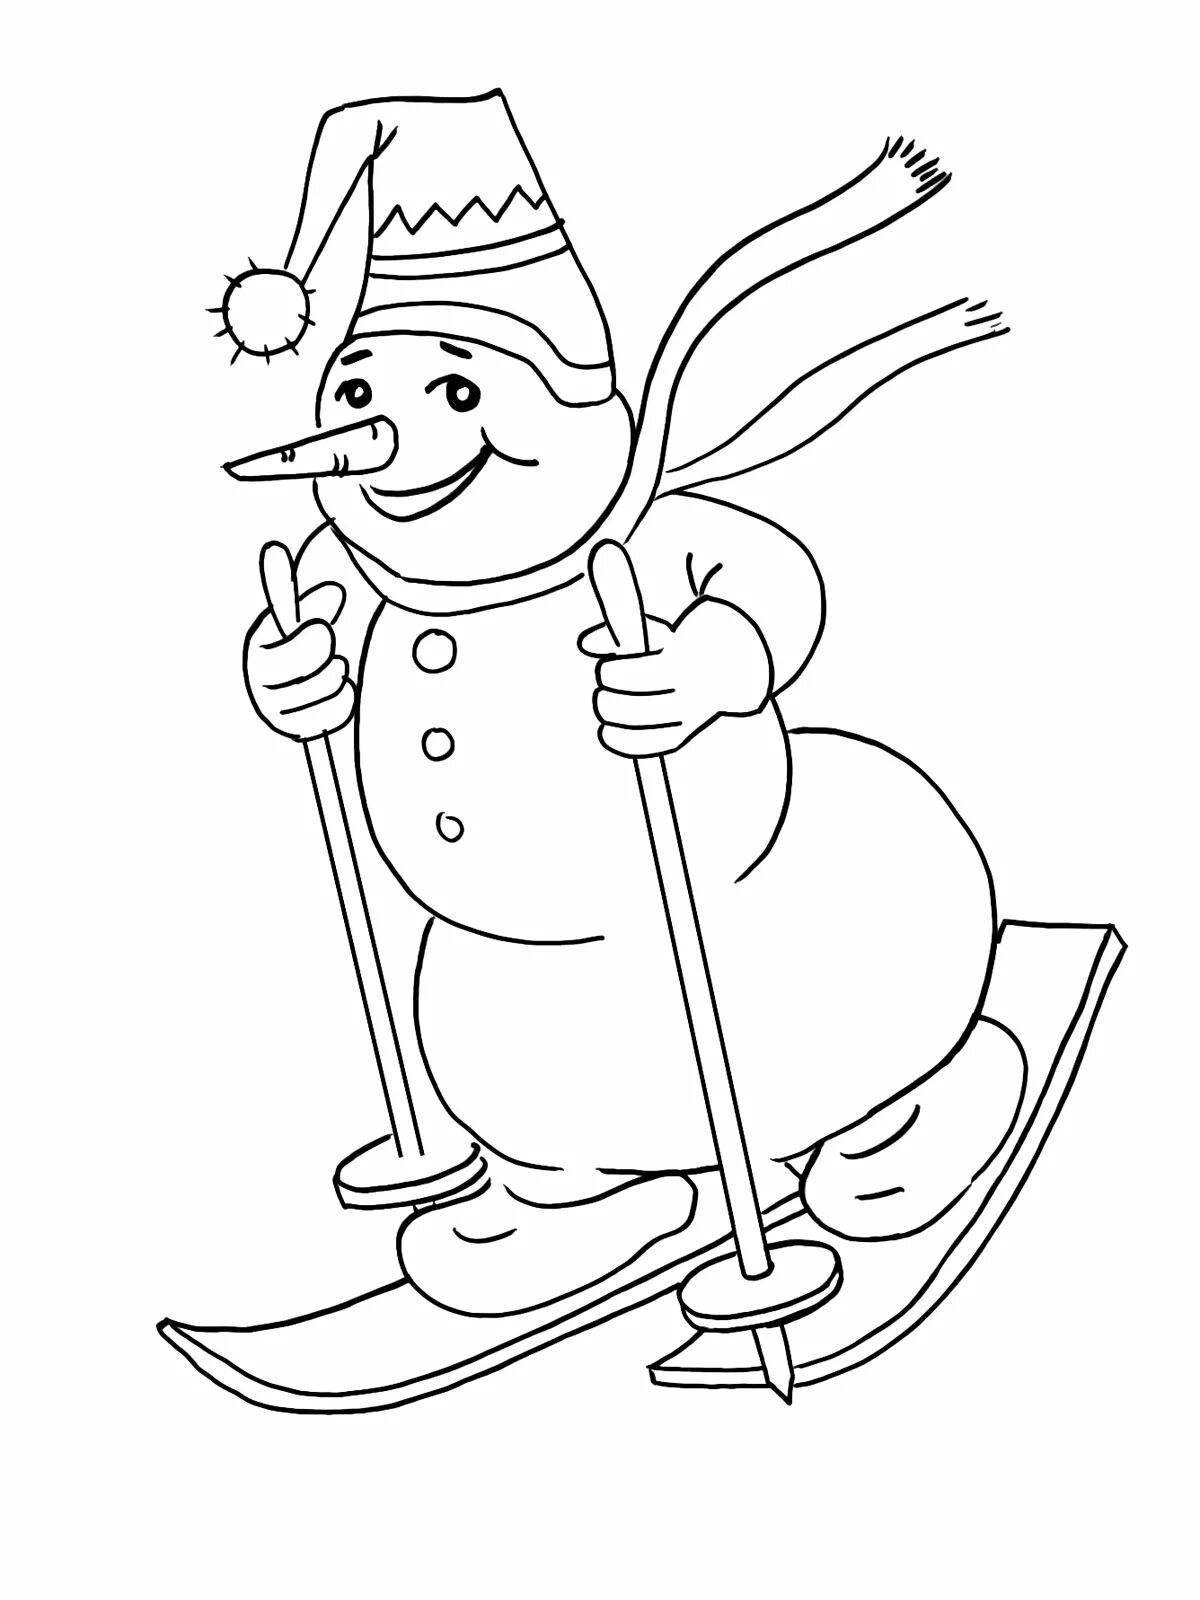 Sledding snowman #7